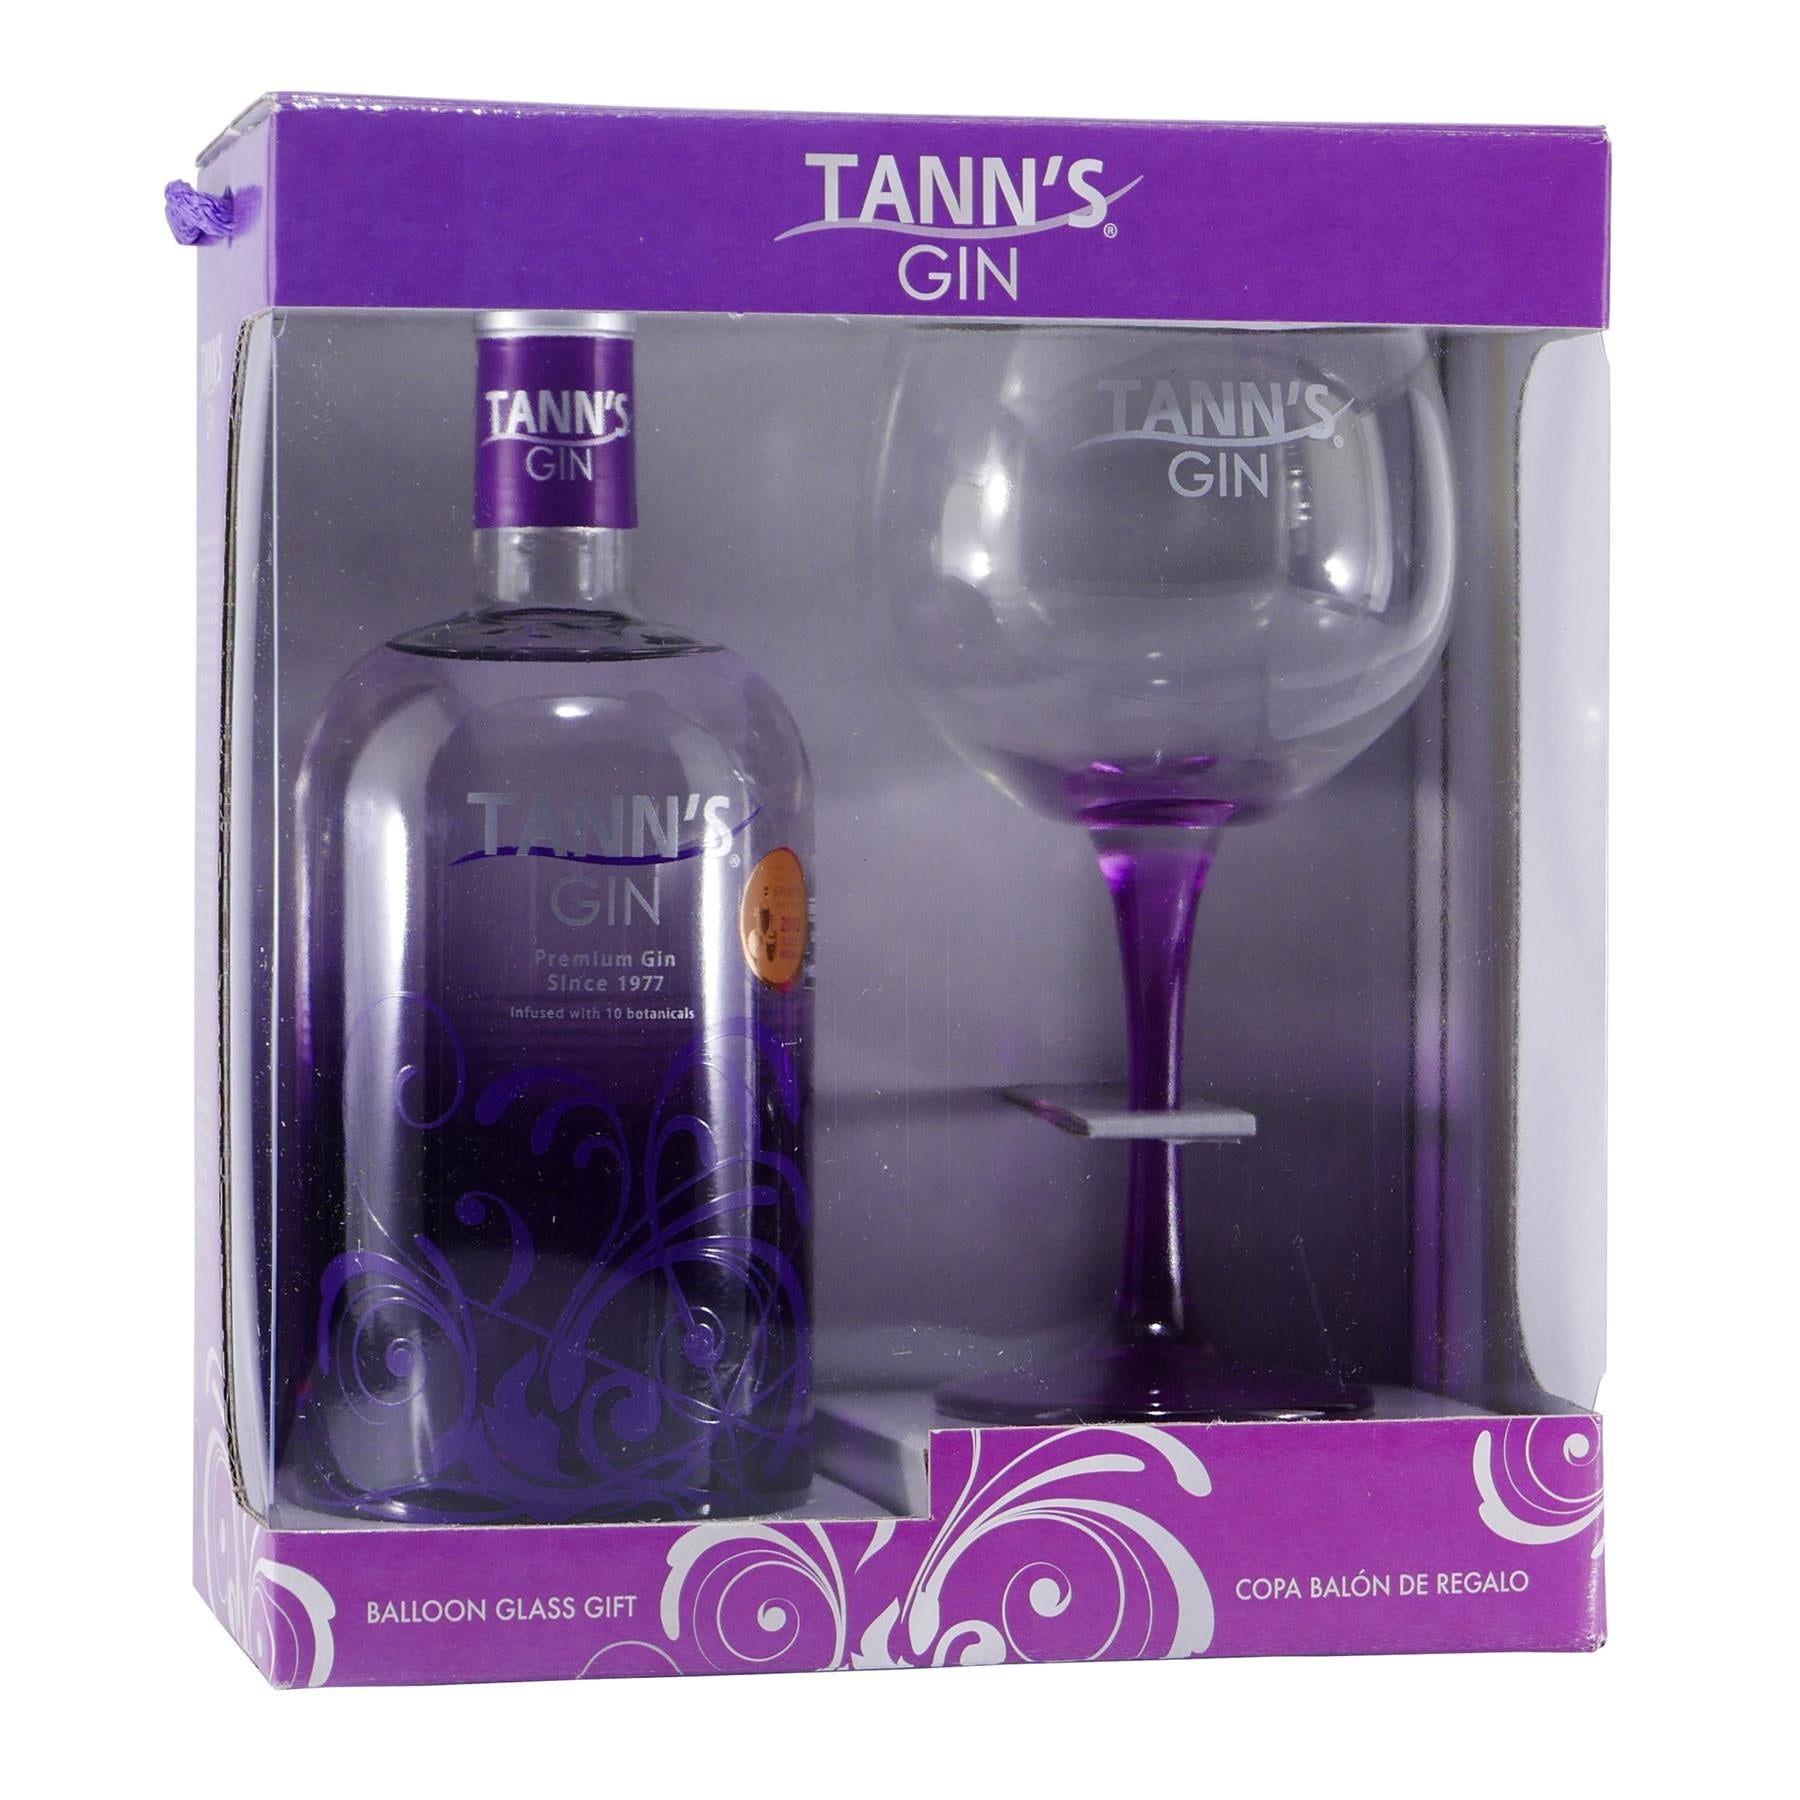 Tann's Premium Gin 10 Botanicals infused – Giftset 0,7L+Glas